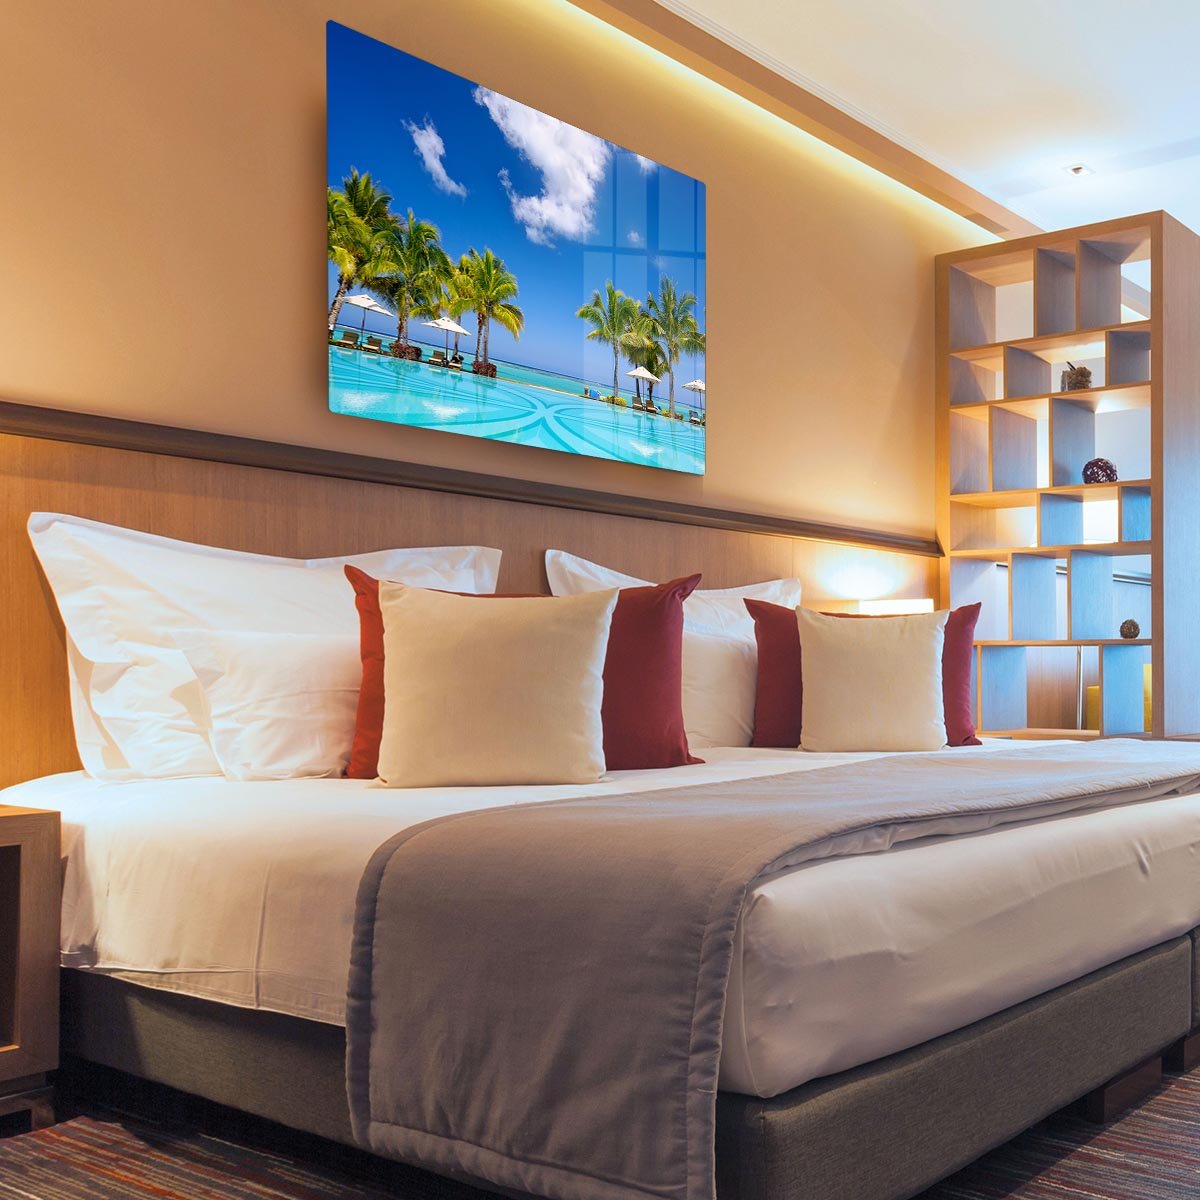 Tropical beach resort with lounge chairs HD Metal Print - Canvas Art Rocks - 3